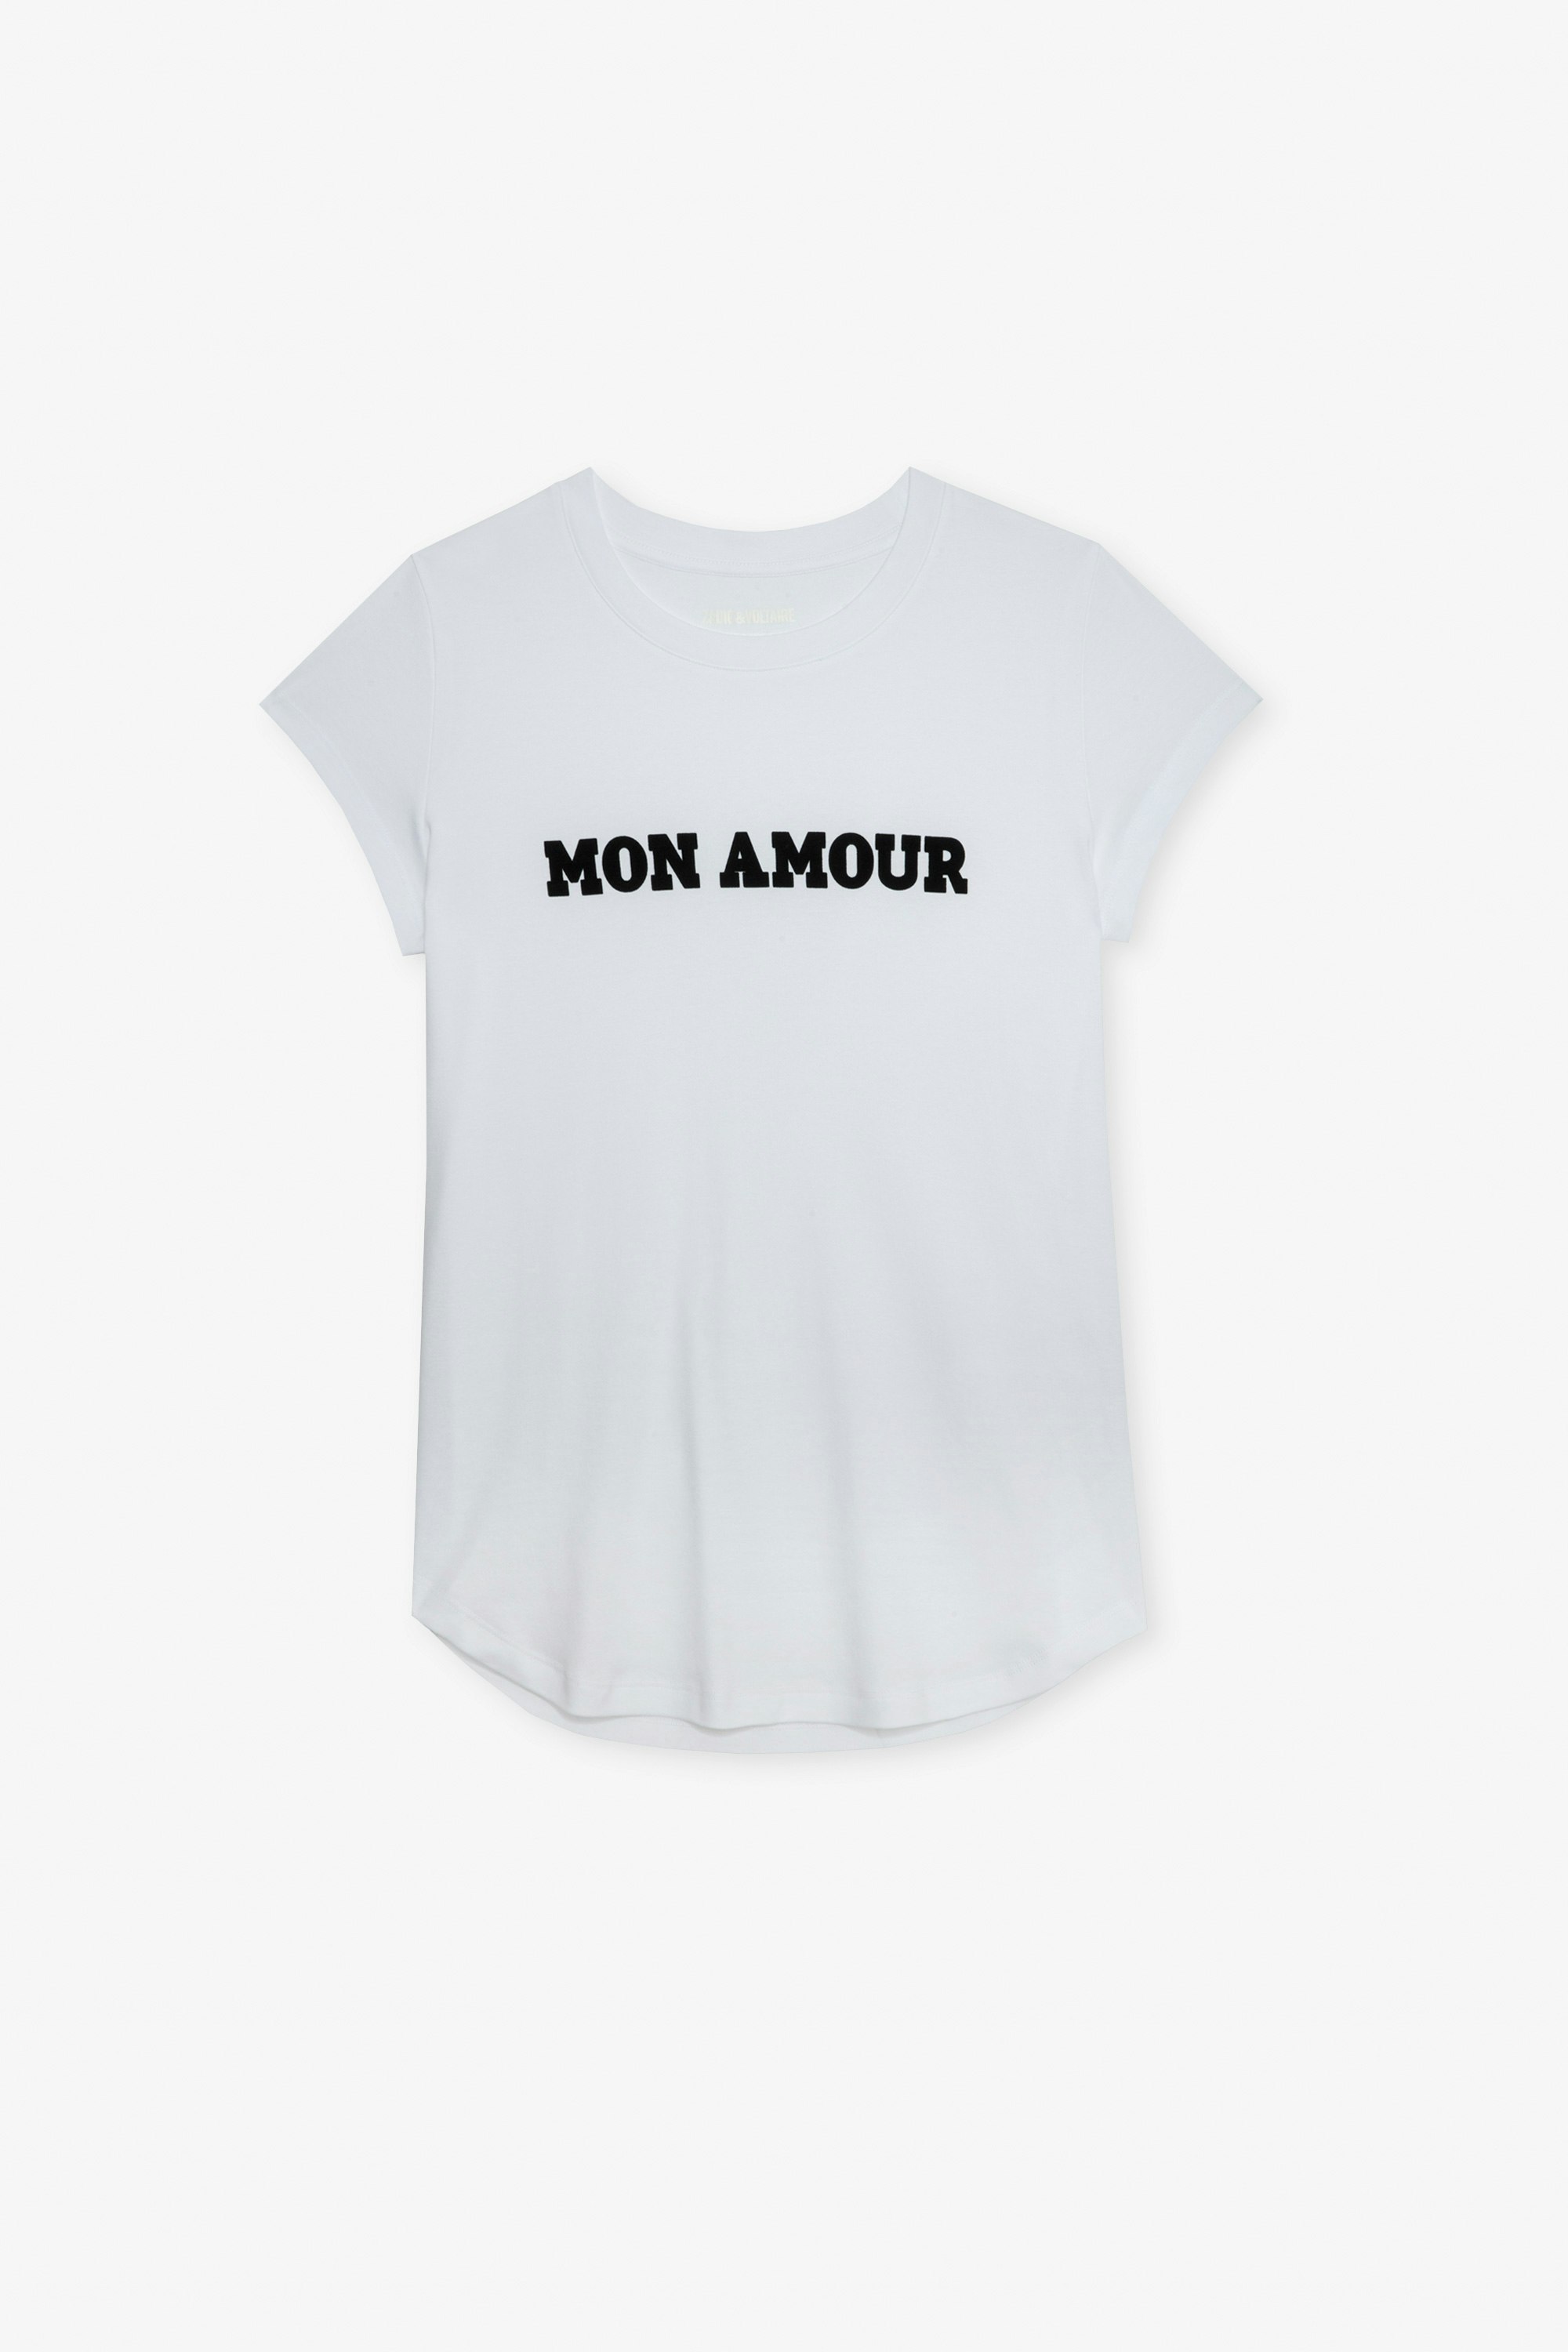 Camiseta Woop Mon Amour Camiseta blanca de algodón con inscripción "Mon amour" para mujer.